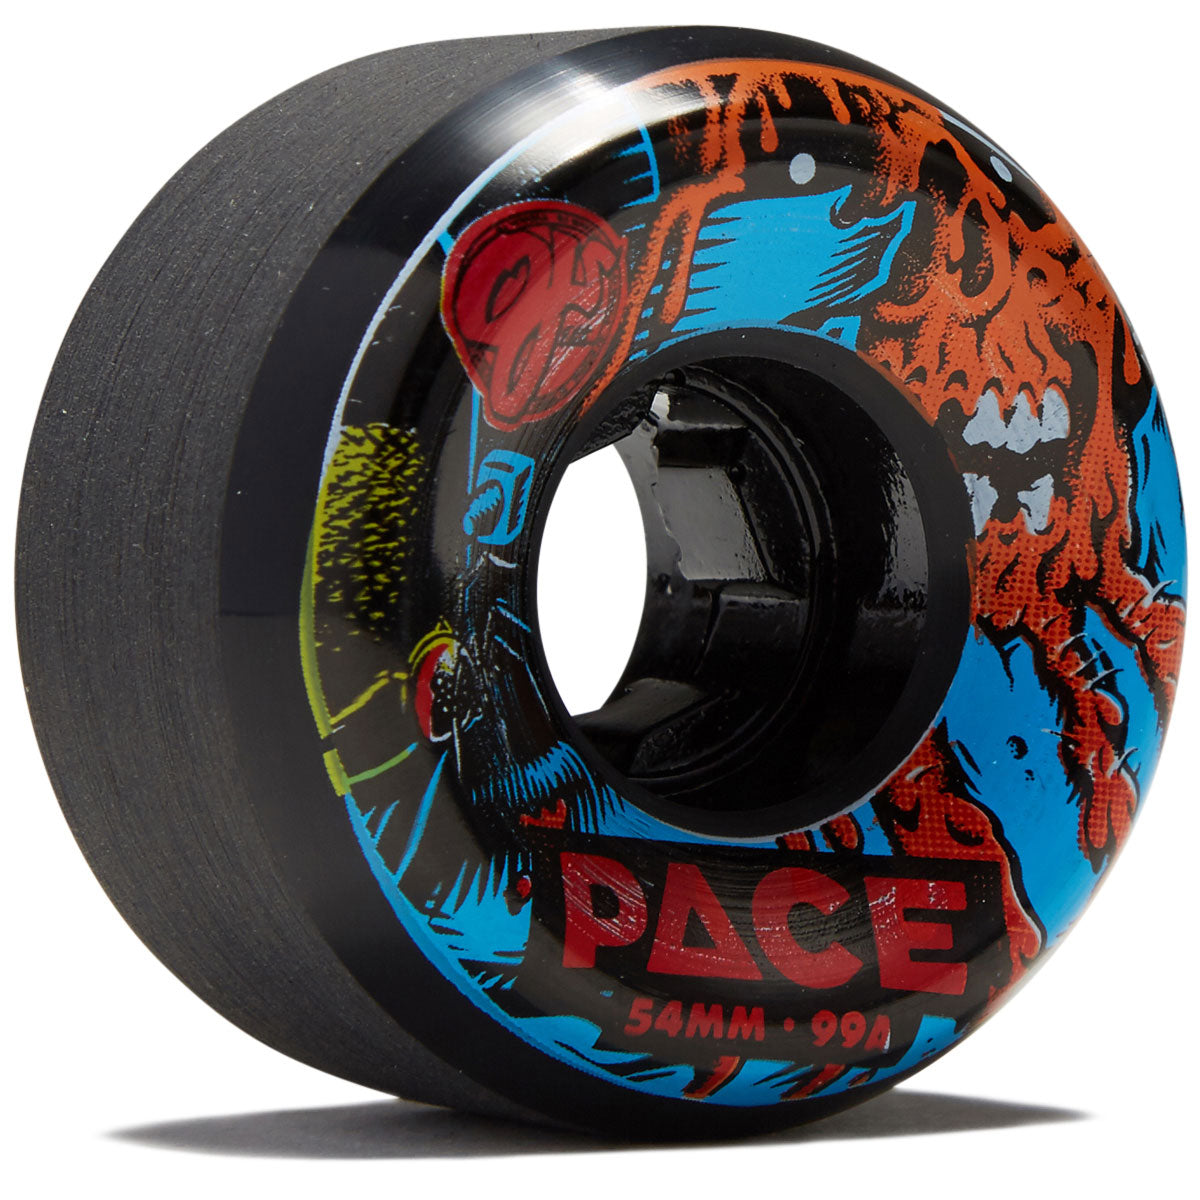 OJ Rob Pace Elite Mini Combos 99a Skateboard Wheels - Black - 54mm image 1